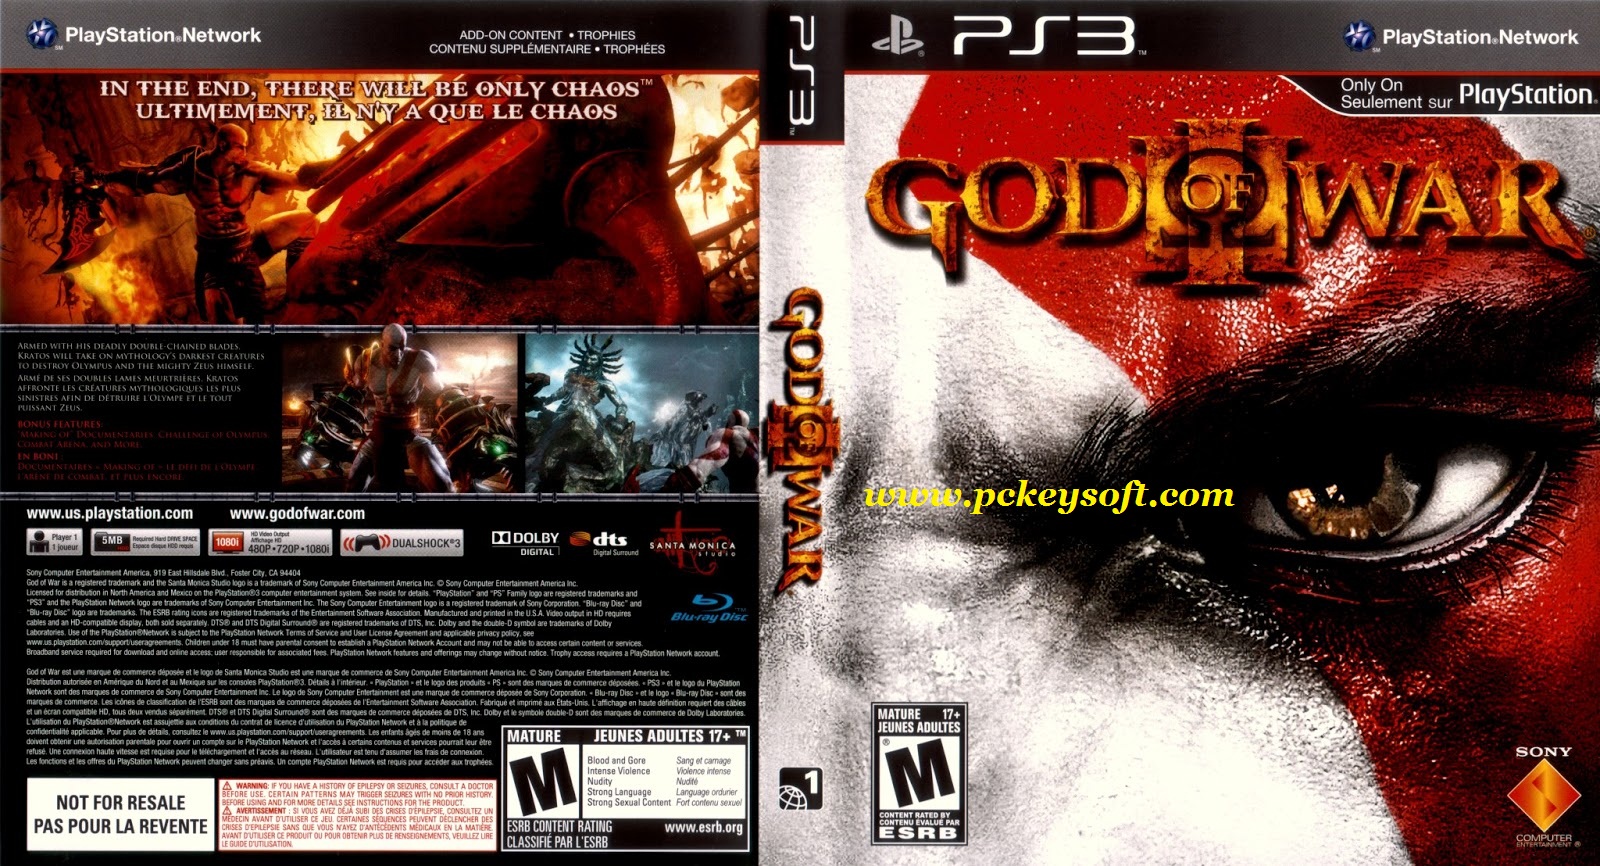 god of war 3 pc download free game full version